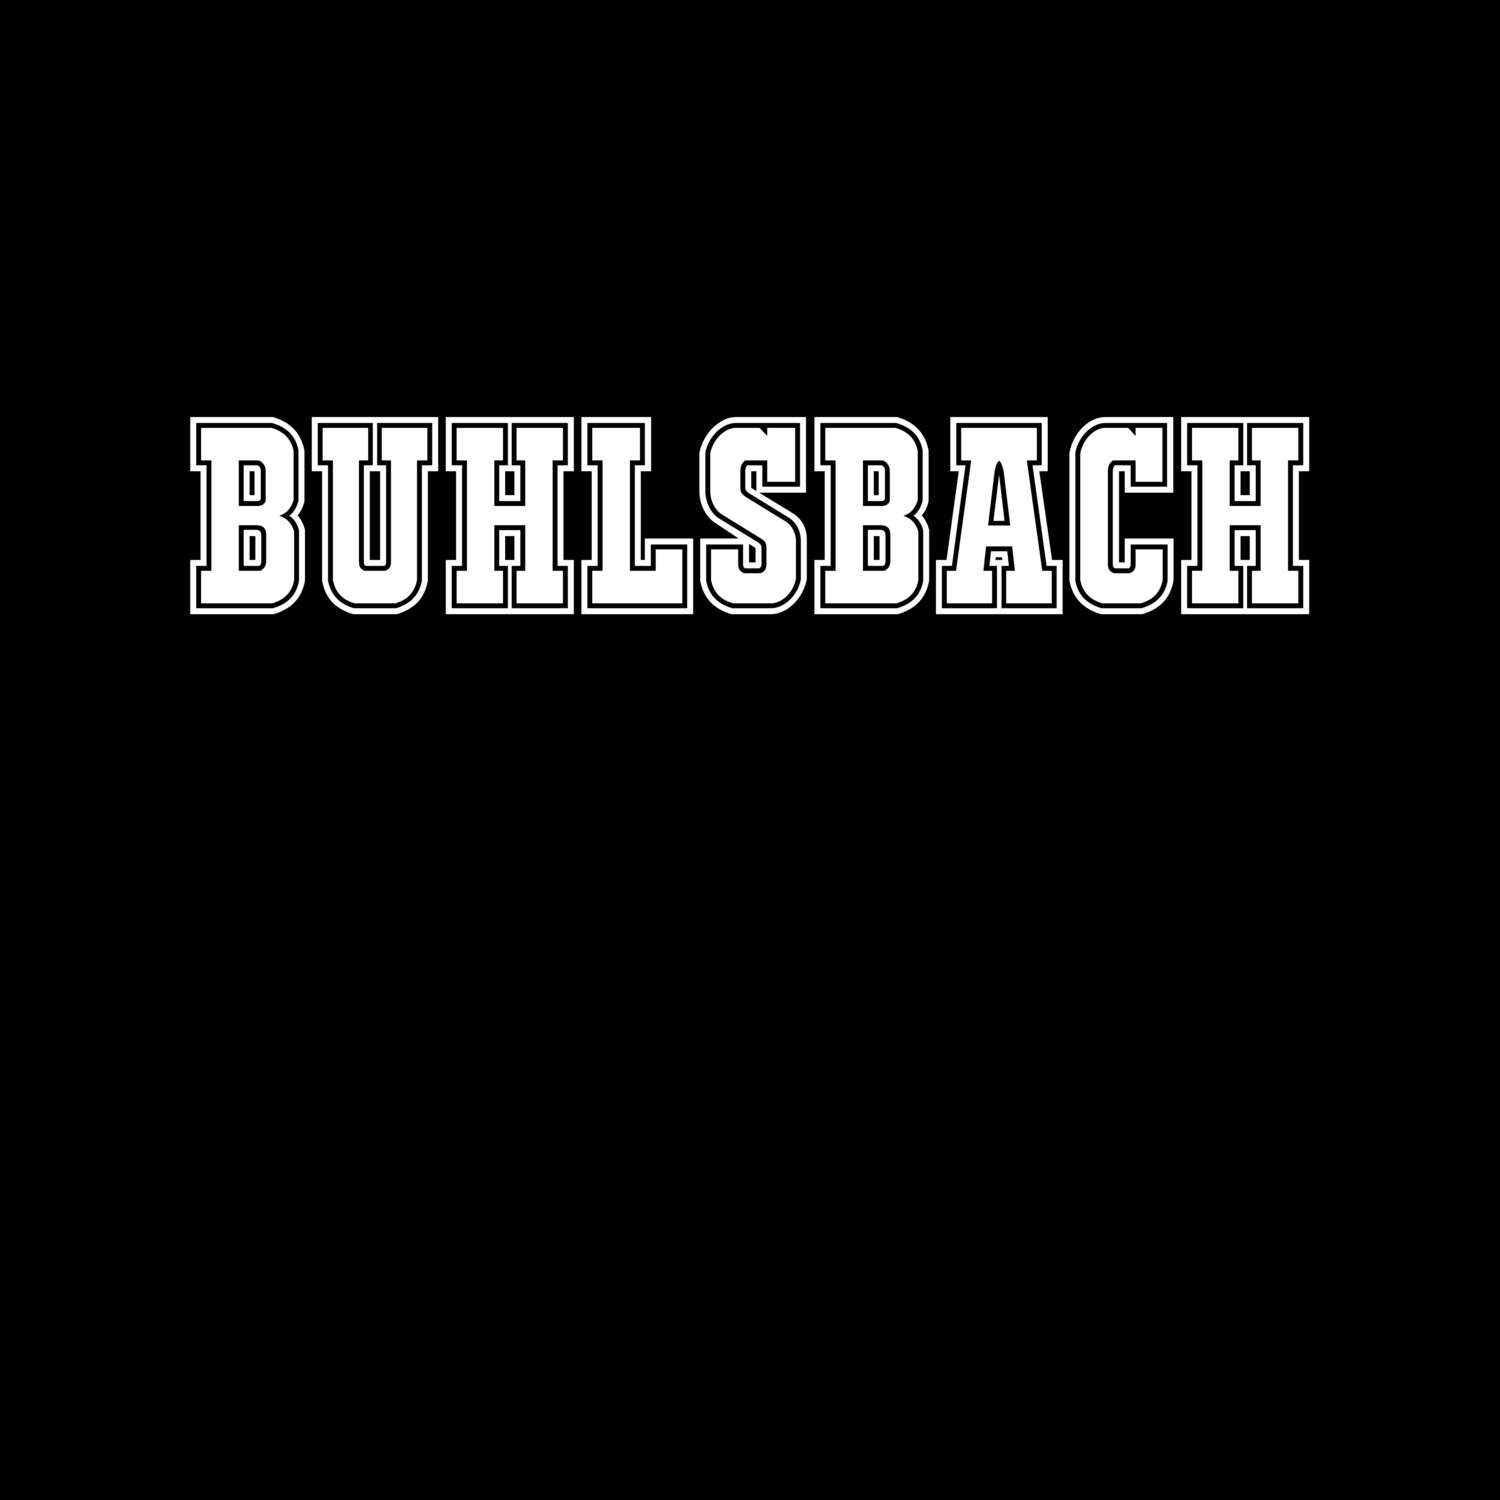 Buhlsbach T-Shirt »Classic«